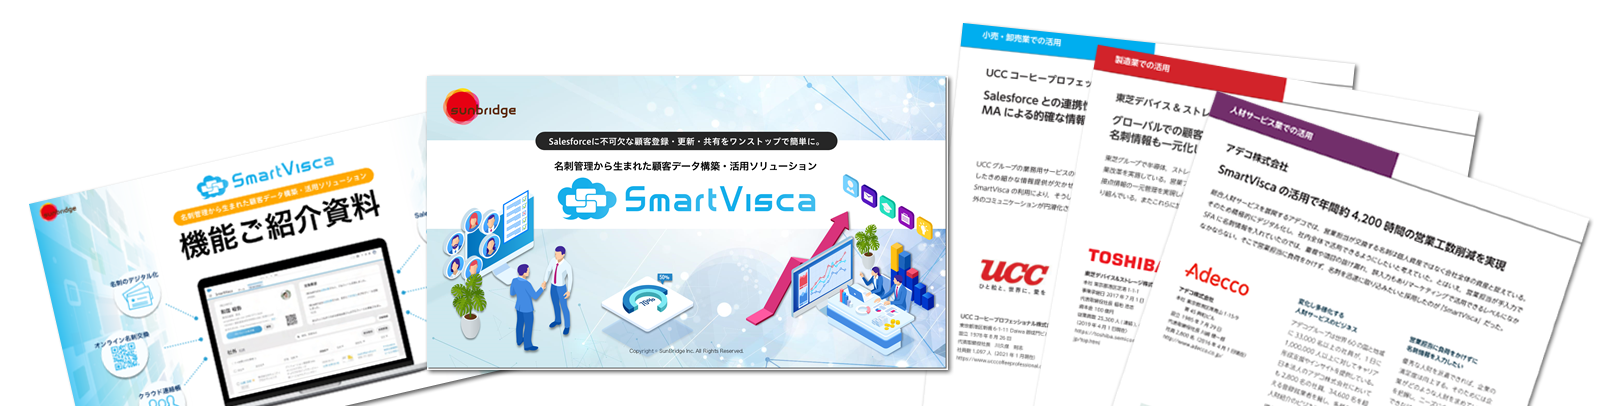 SmartVisca資料3点セット<br />～特徴・機能・事例集の資料3つをセットでダウンロード～